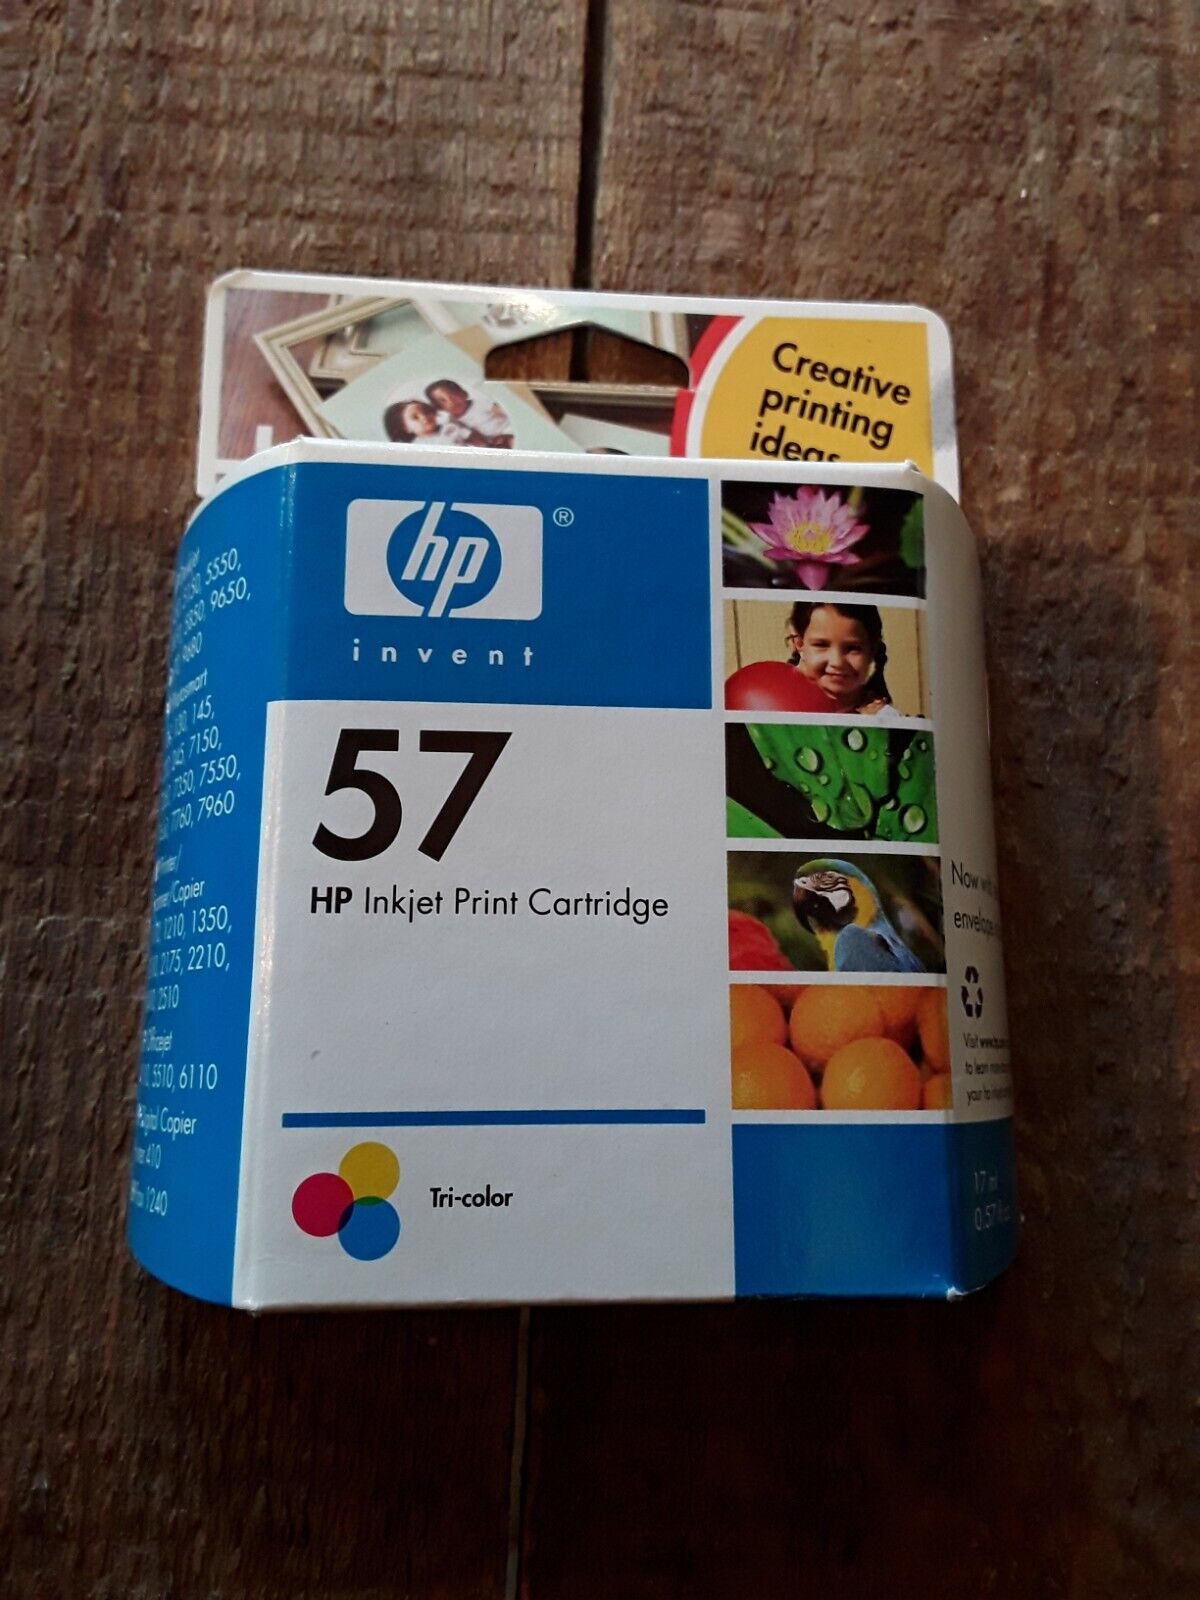 HP Invent 57 TRI COLOR Inkjet Print Cartridge, Expired